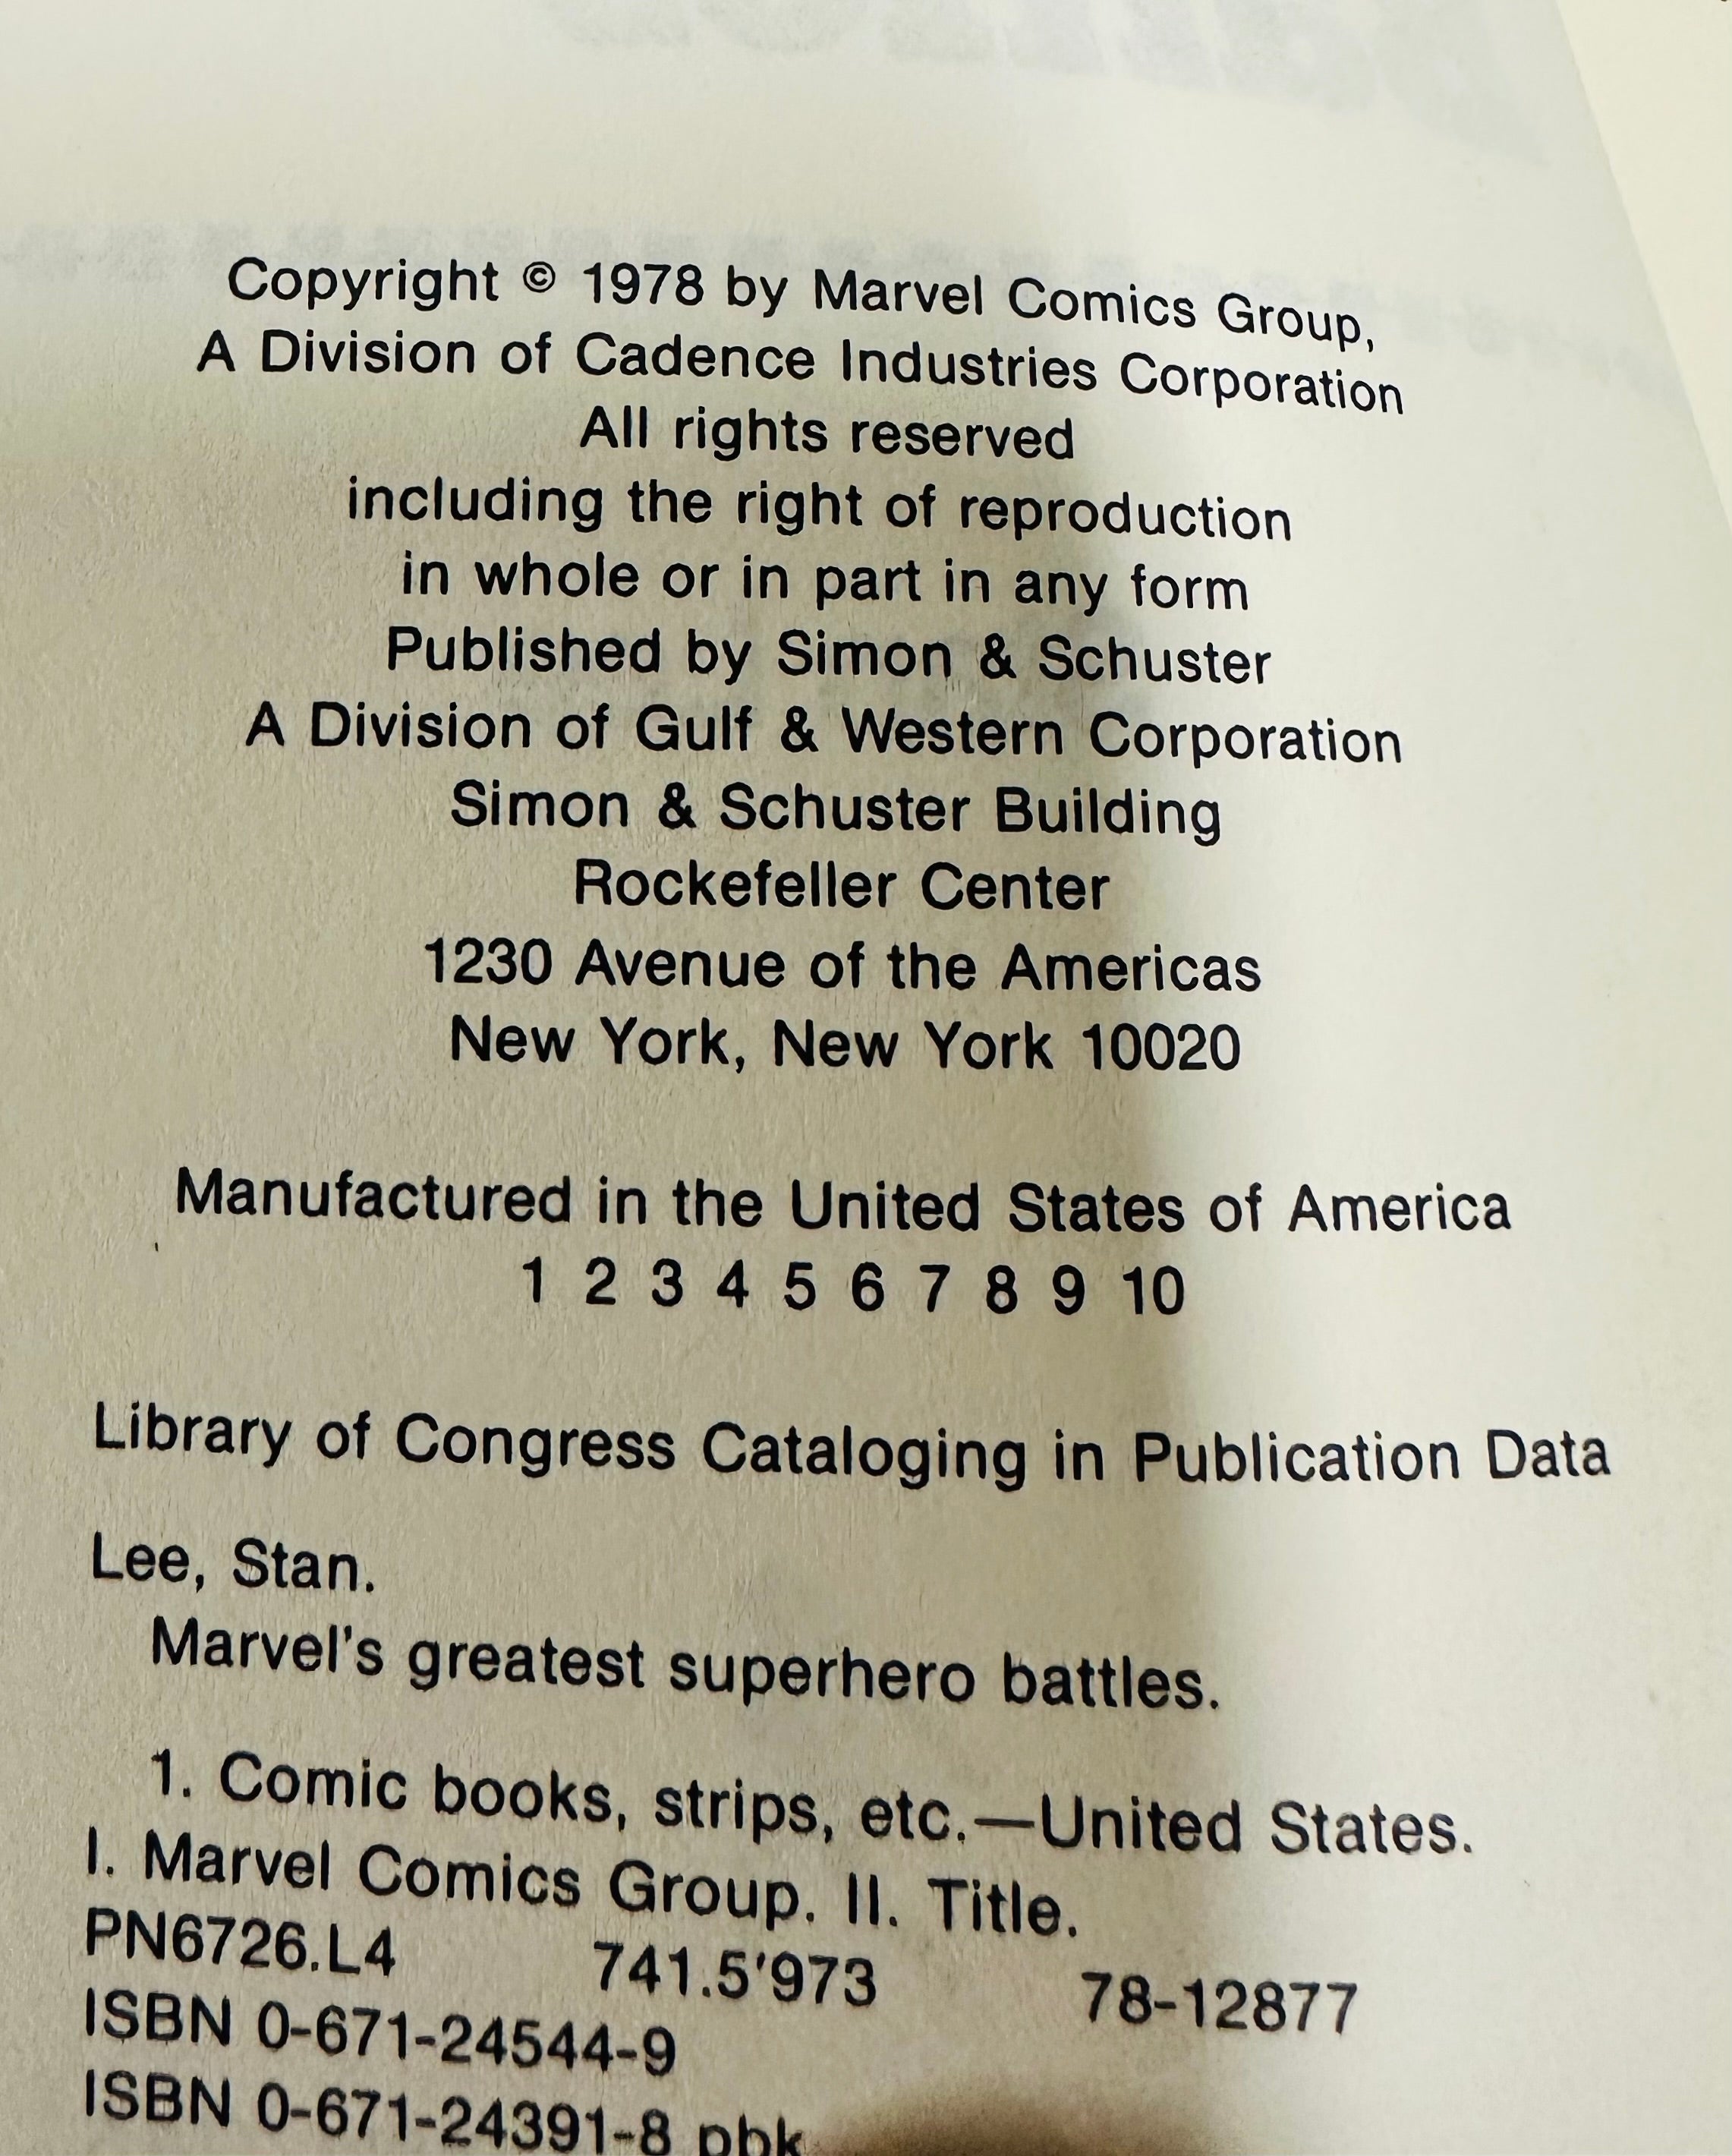 Marvel Greatest Superhero Battles soft cover large comic book 1978